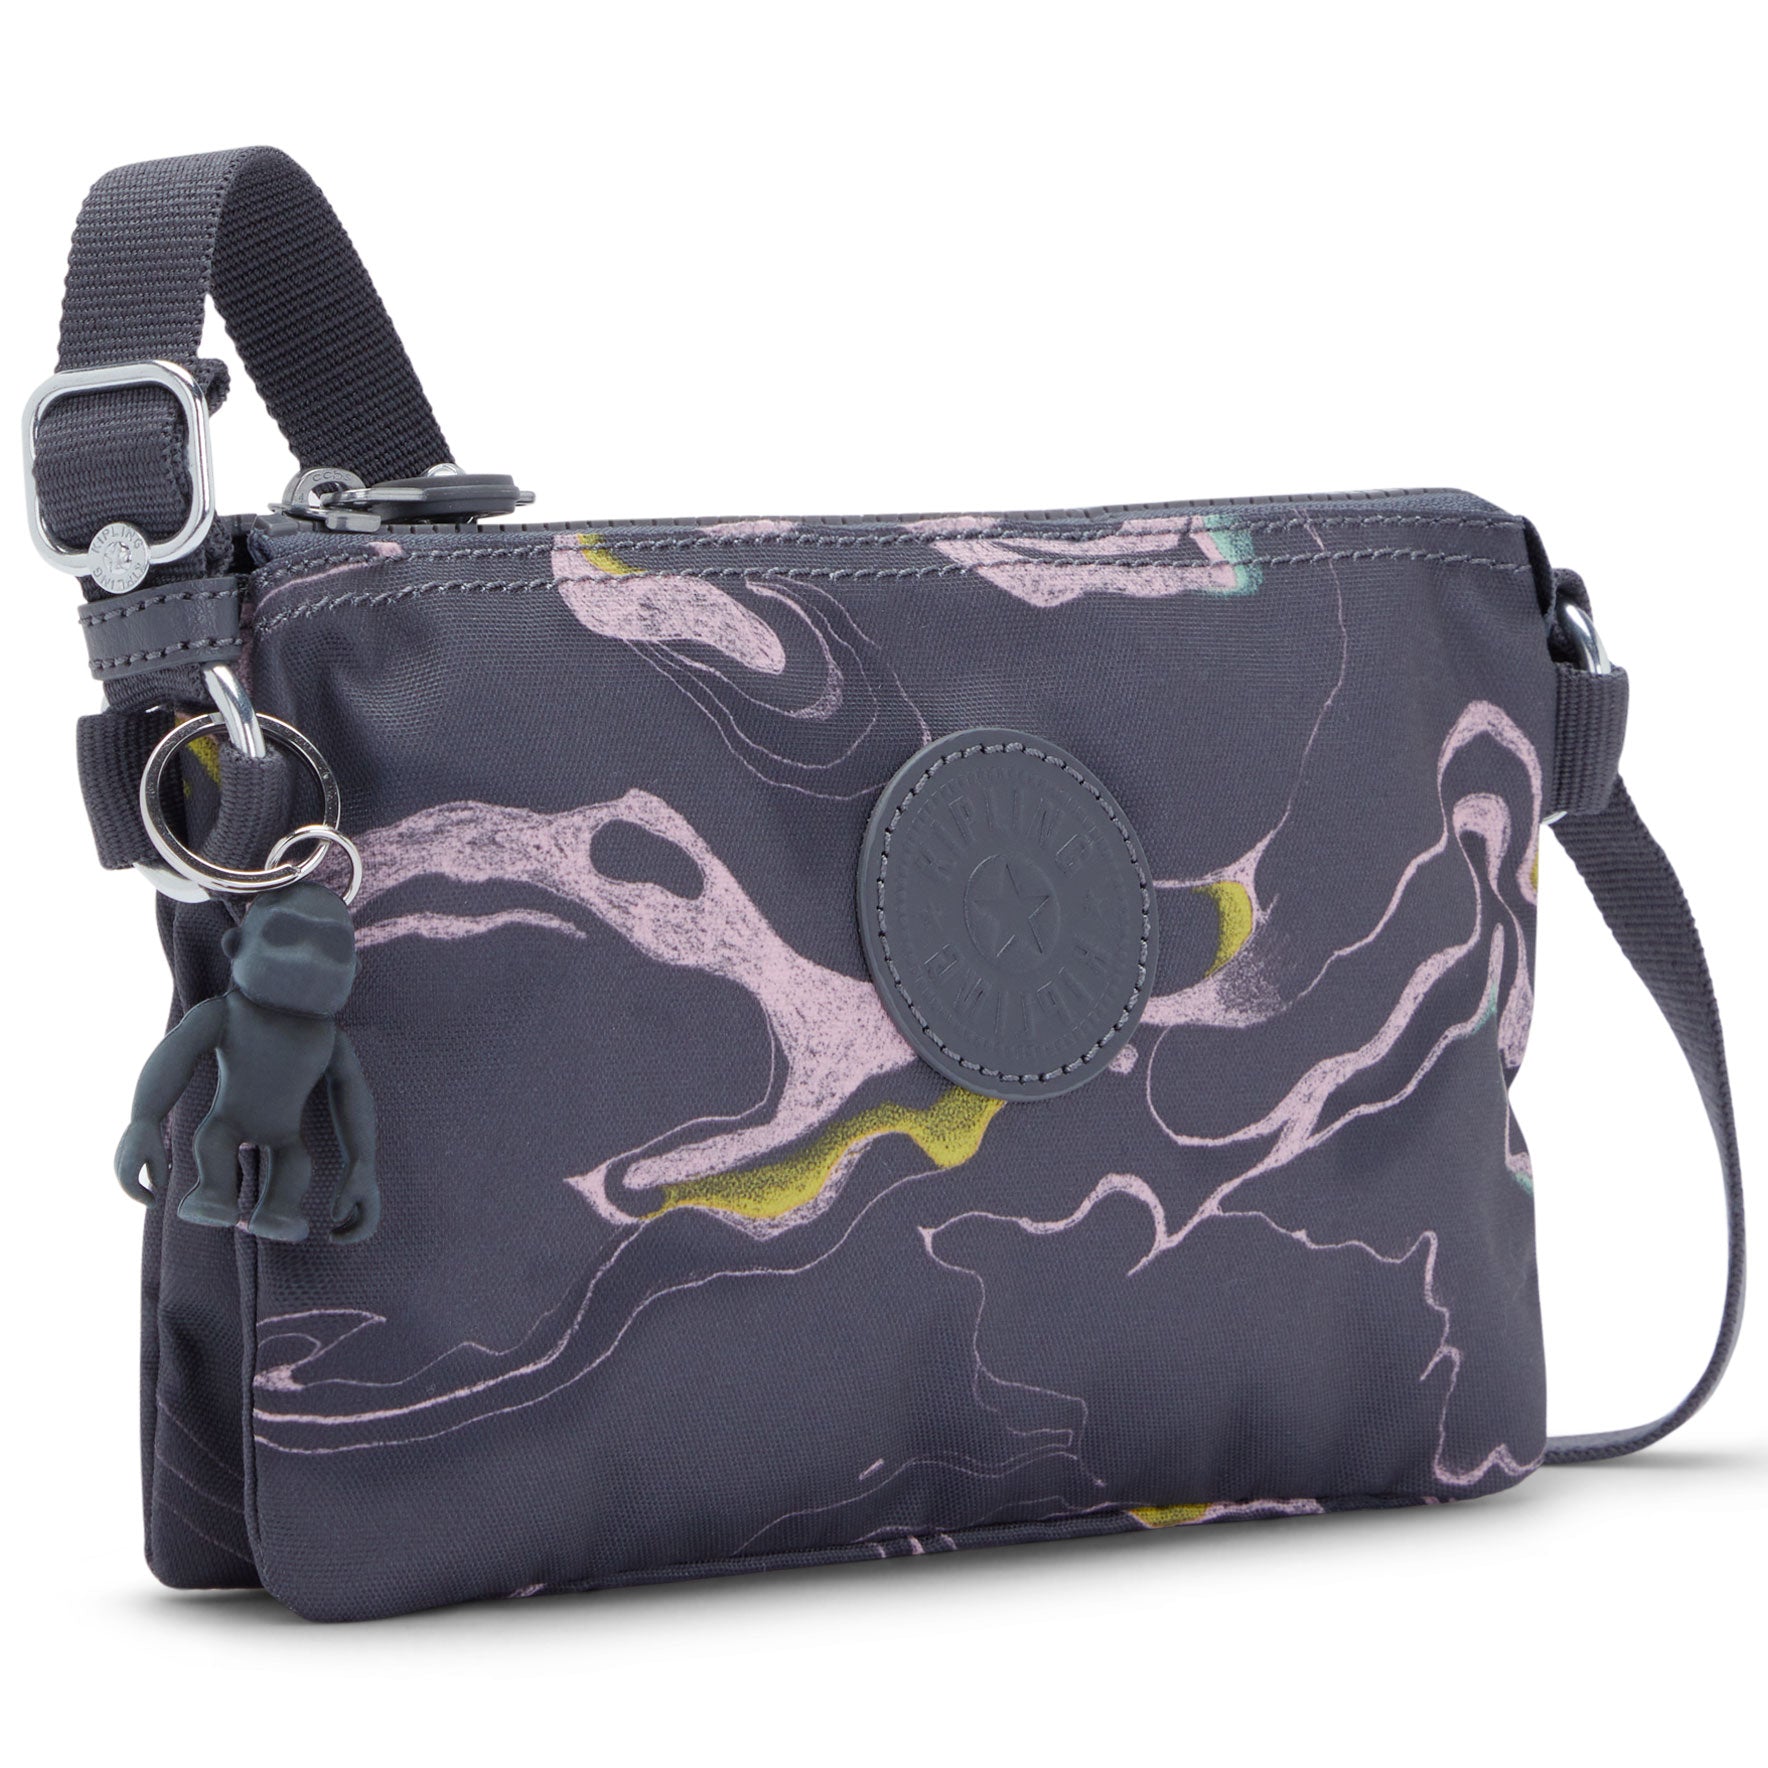 Kipling Women's Mikaela Printed Nylon Crossbody Bag with Adjustable Strap